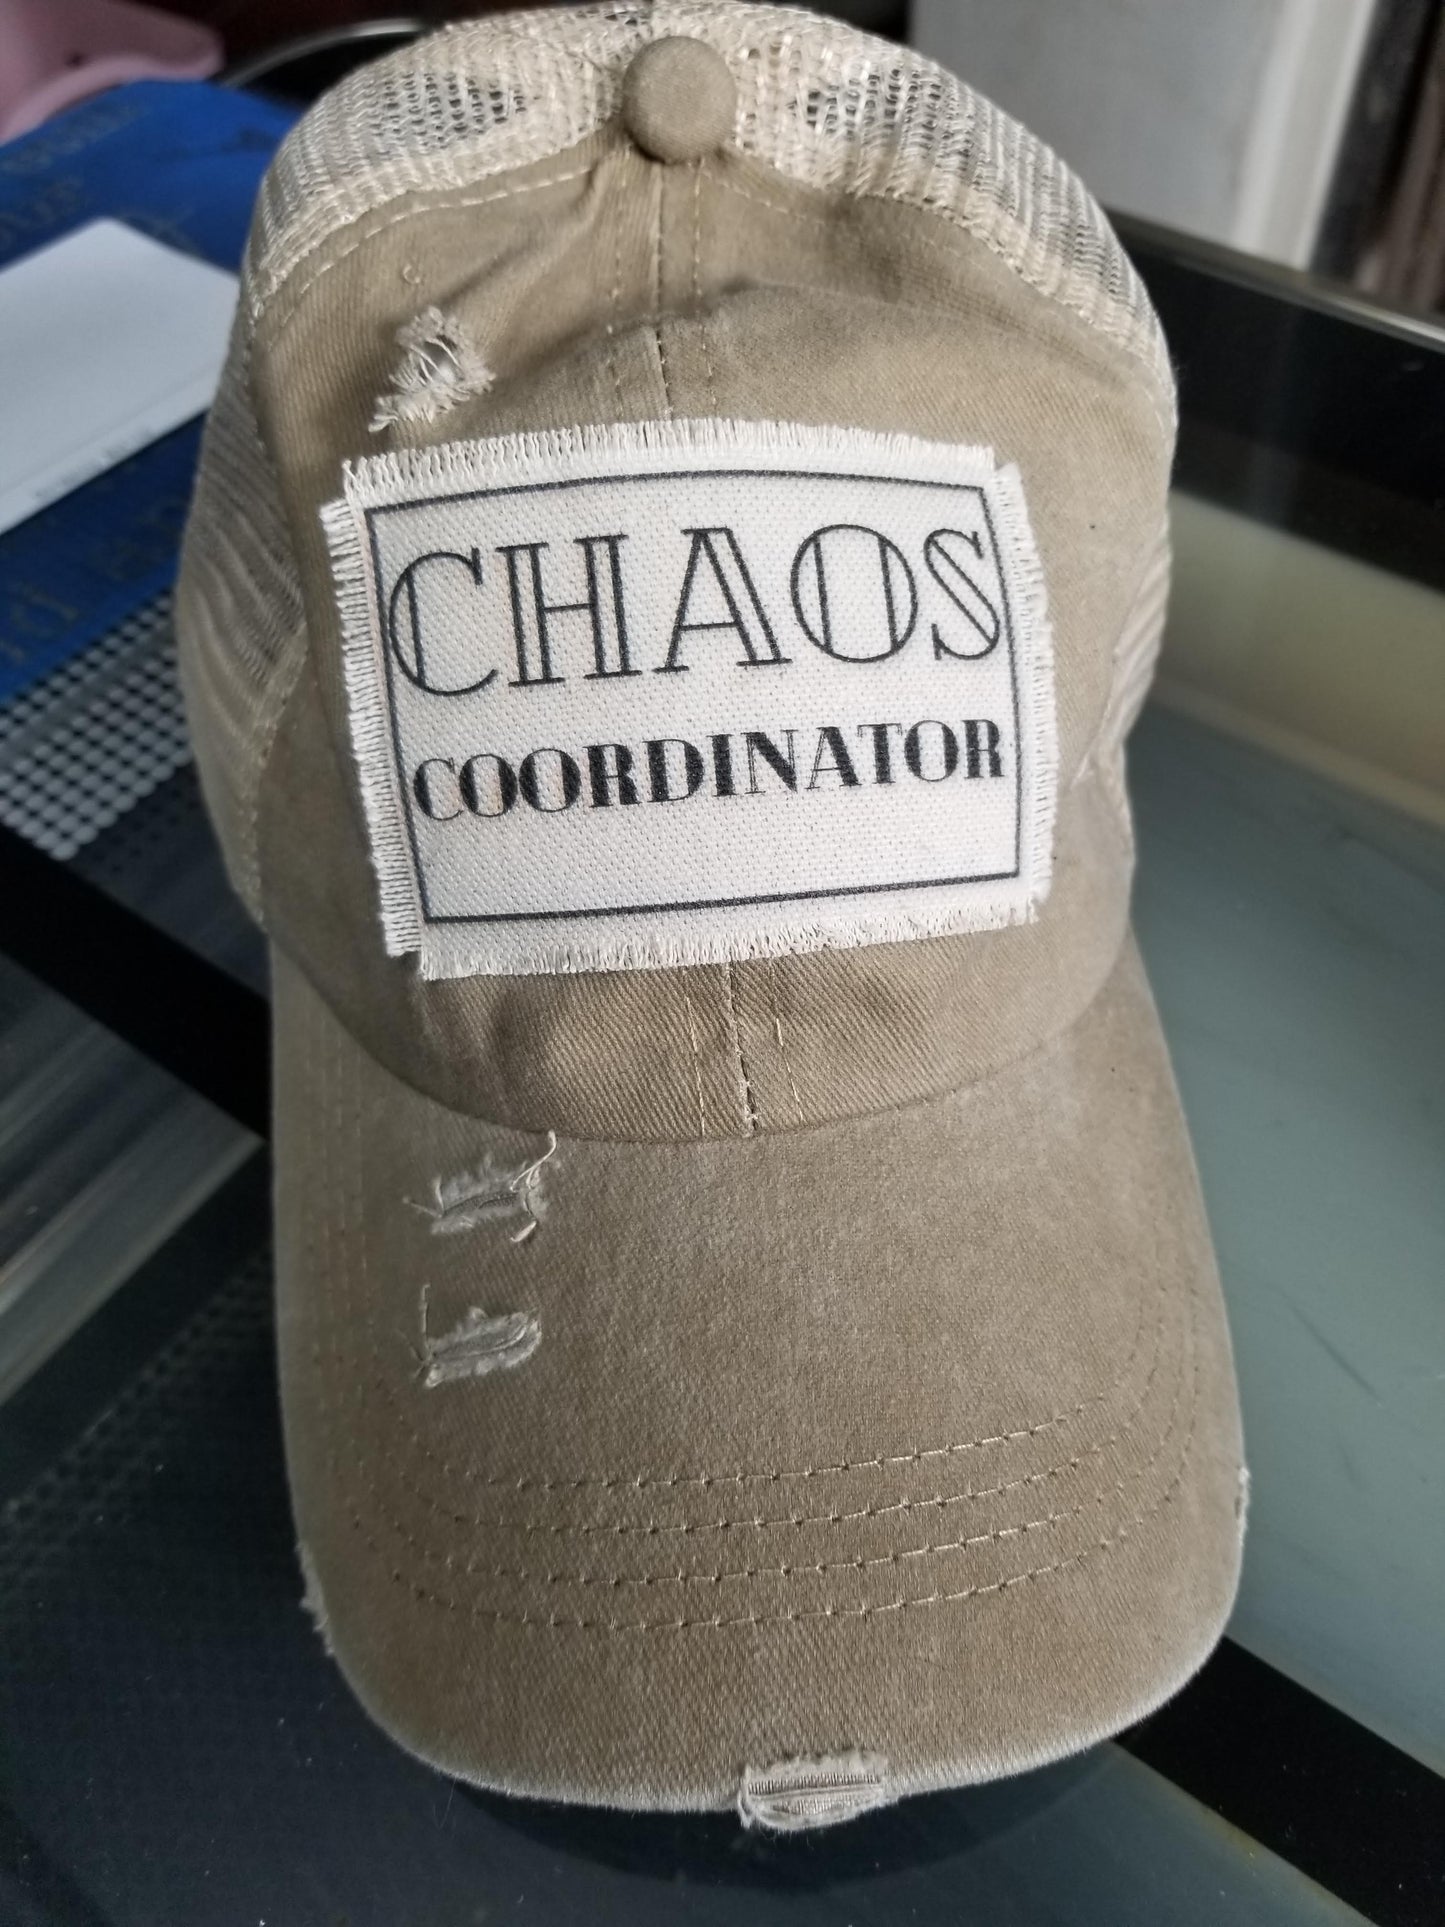 Chaos coordinator hat